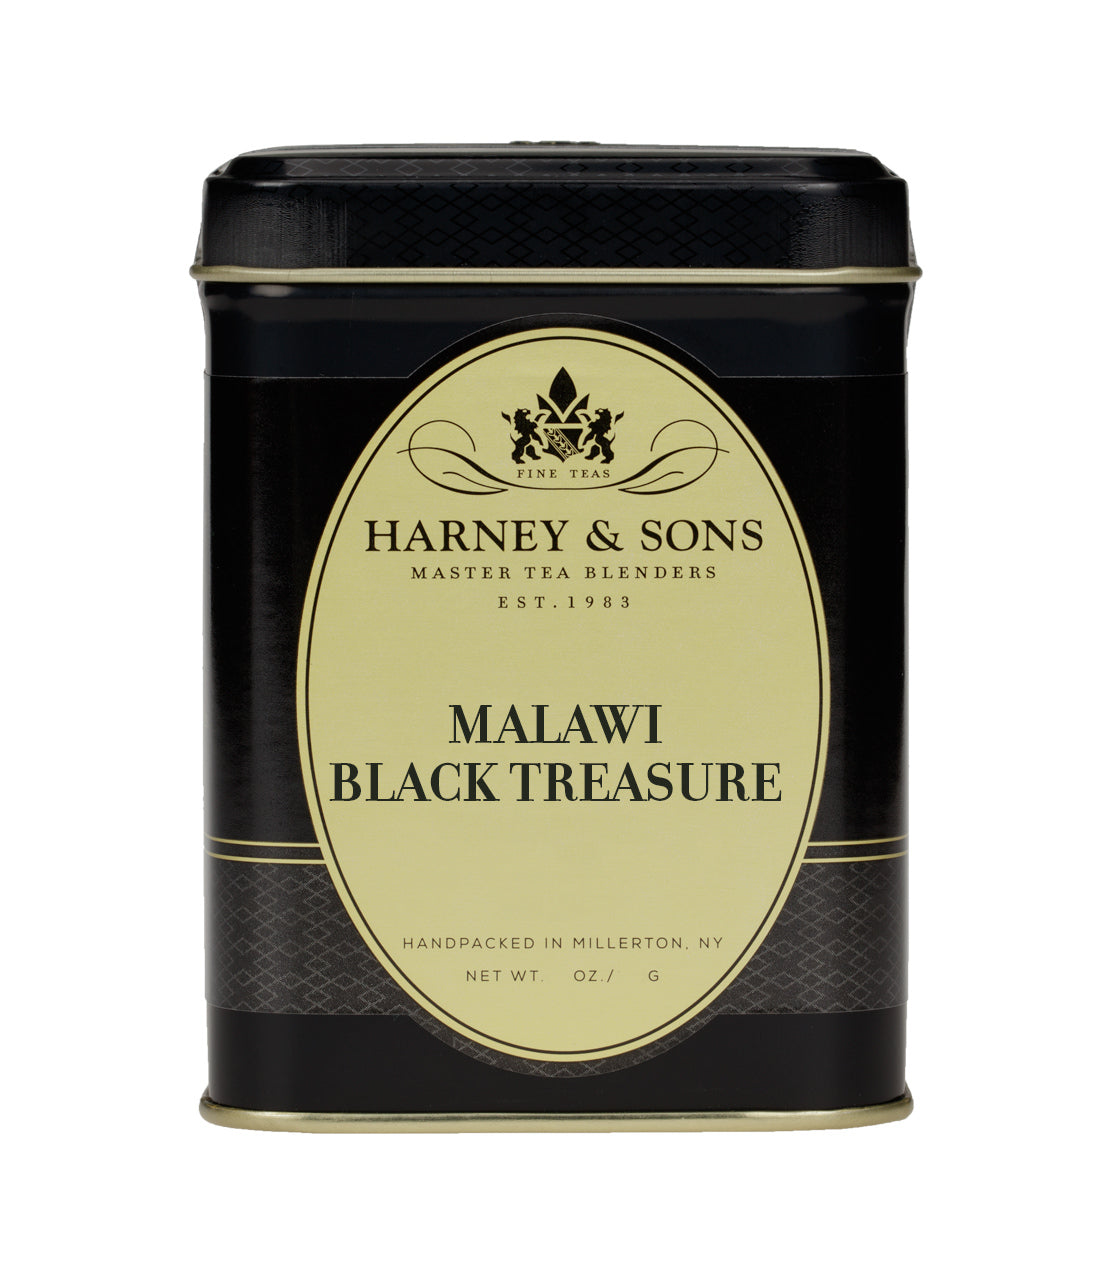 Malawi Black Treasure